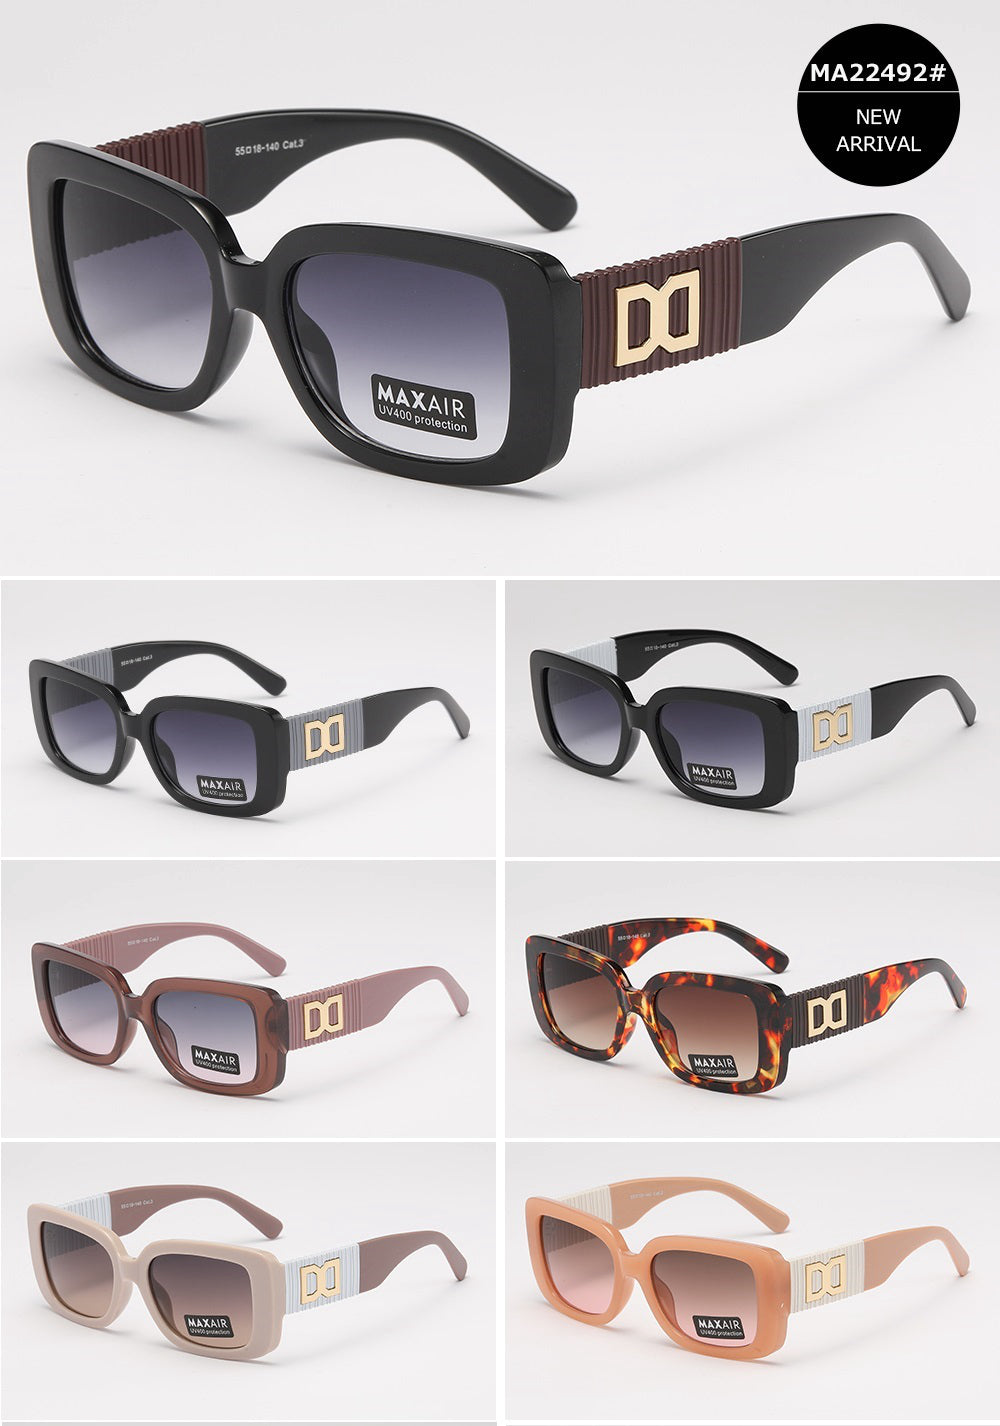 Maxair 22492 Sunglasses